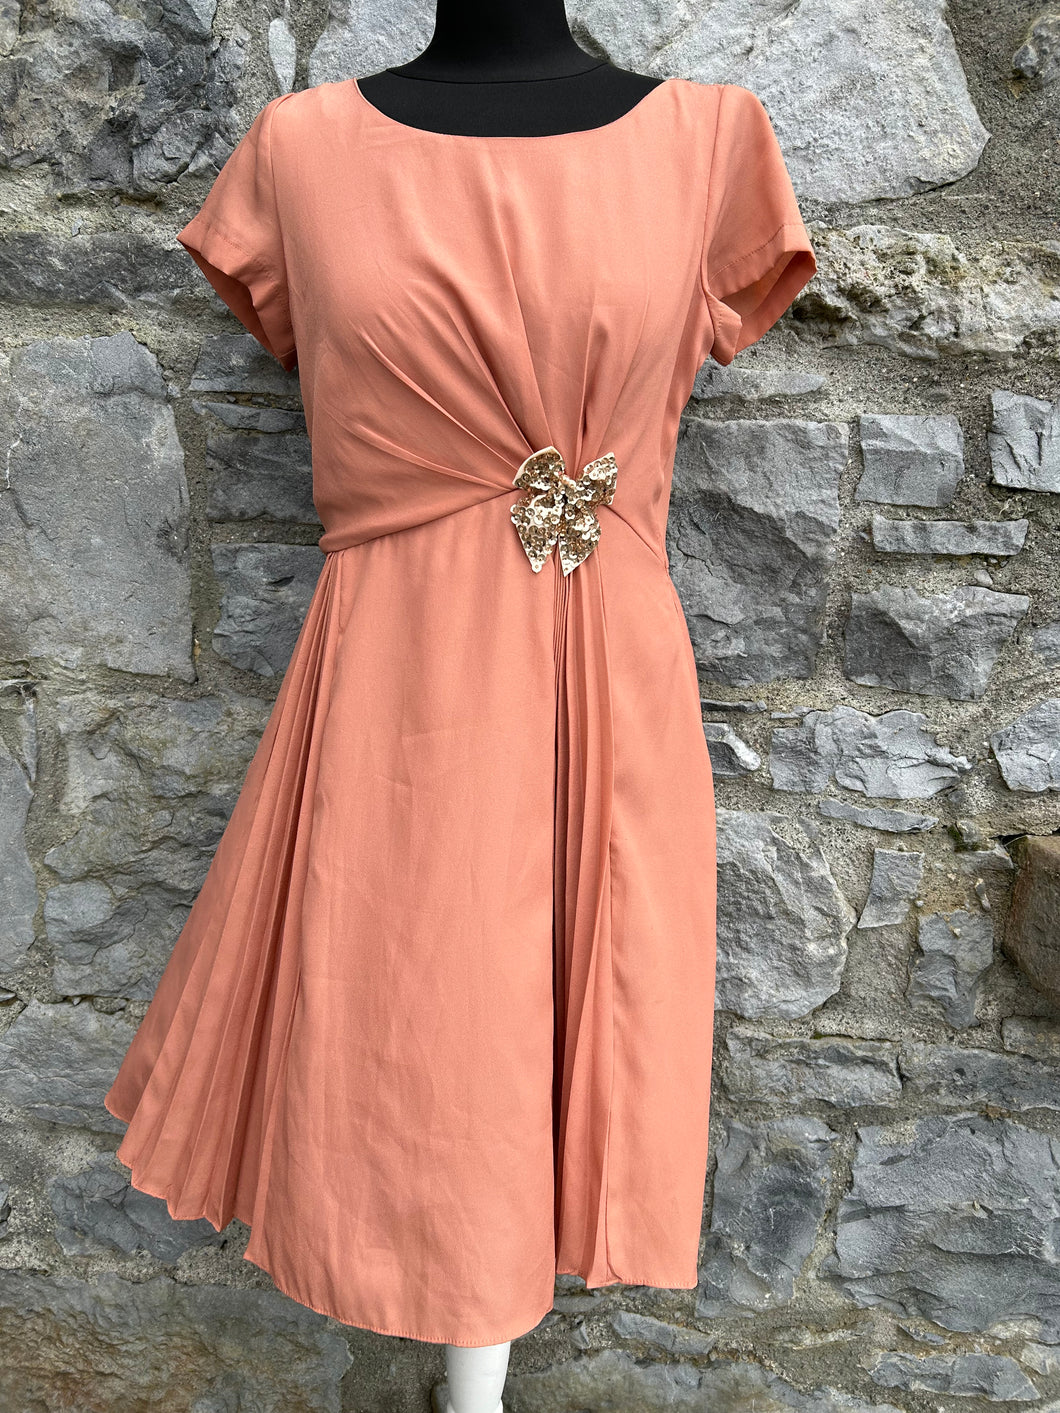 Peach pleated dress uk 8-10